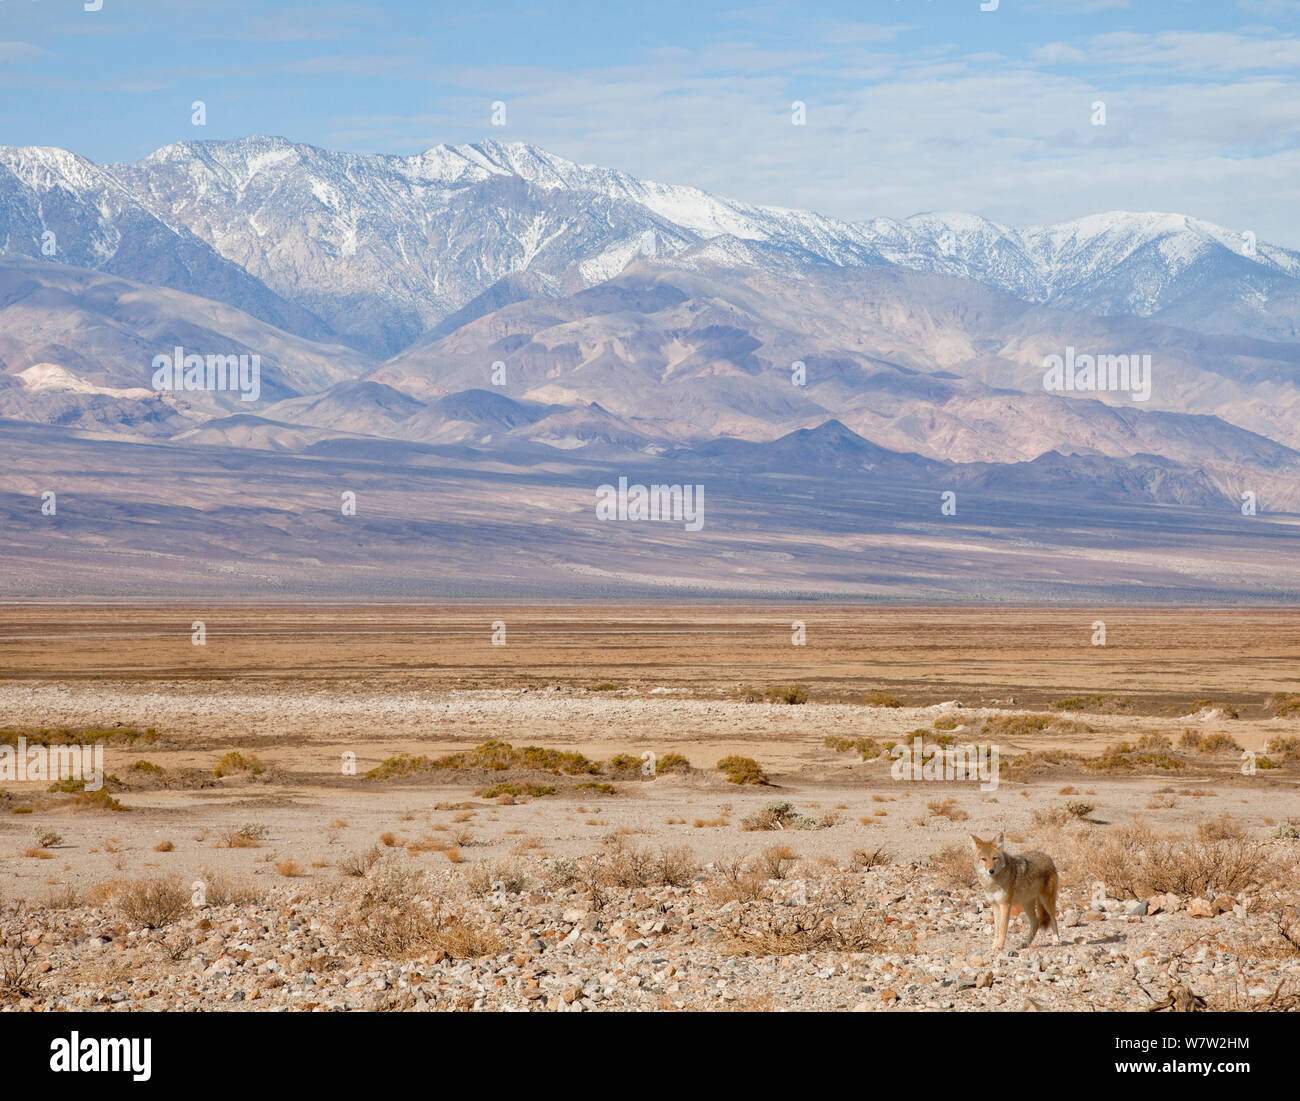 Coyote (Canis latrans) posing in habitat, with Snowy Telescope Peak, Death Valley National Park, California, USA, November 2013. Stock Photo